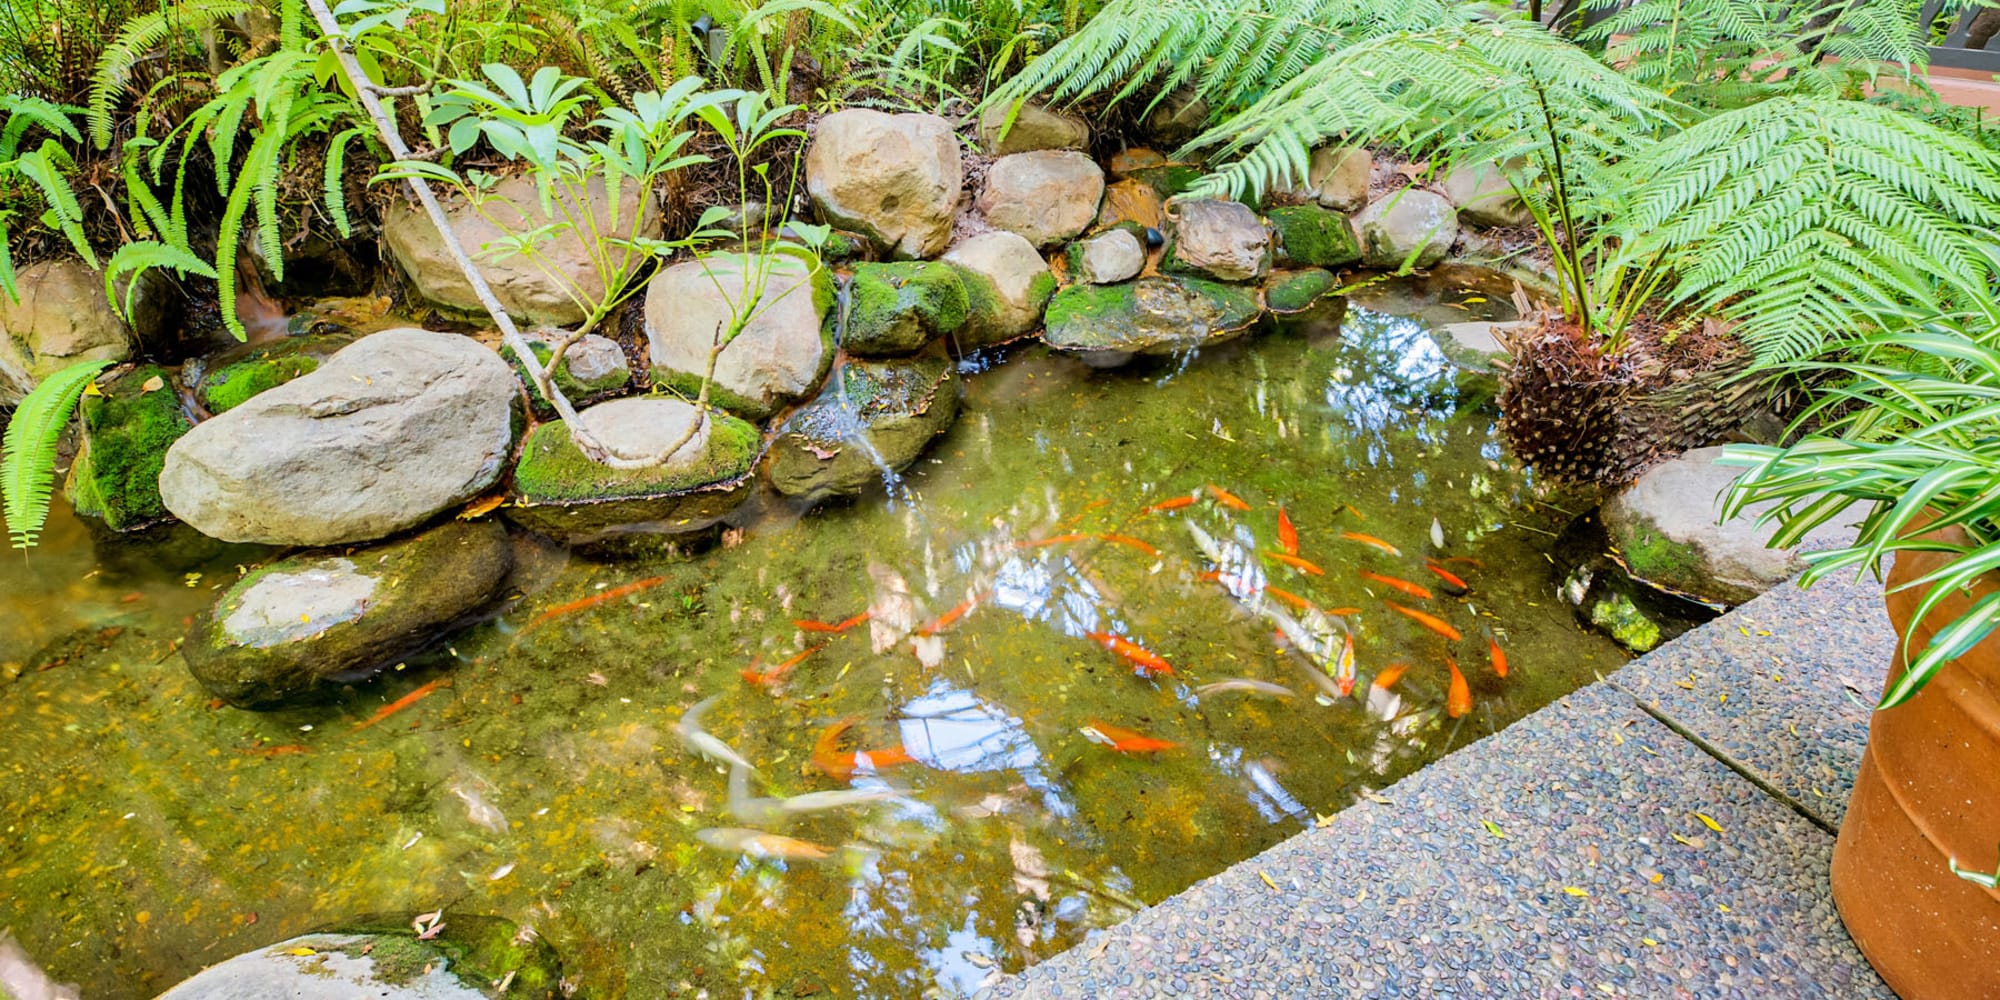 Koi pond at Casa Granada in Los Angeles, California